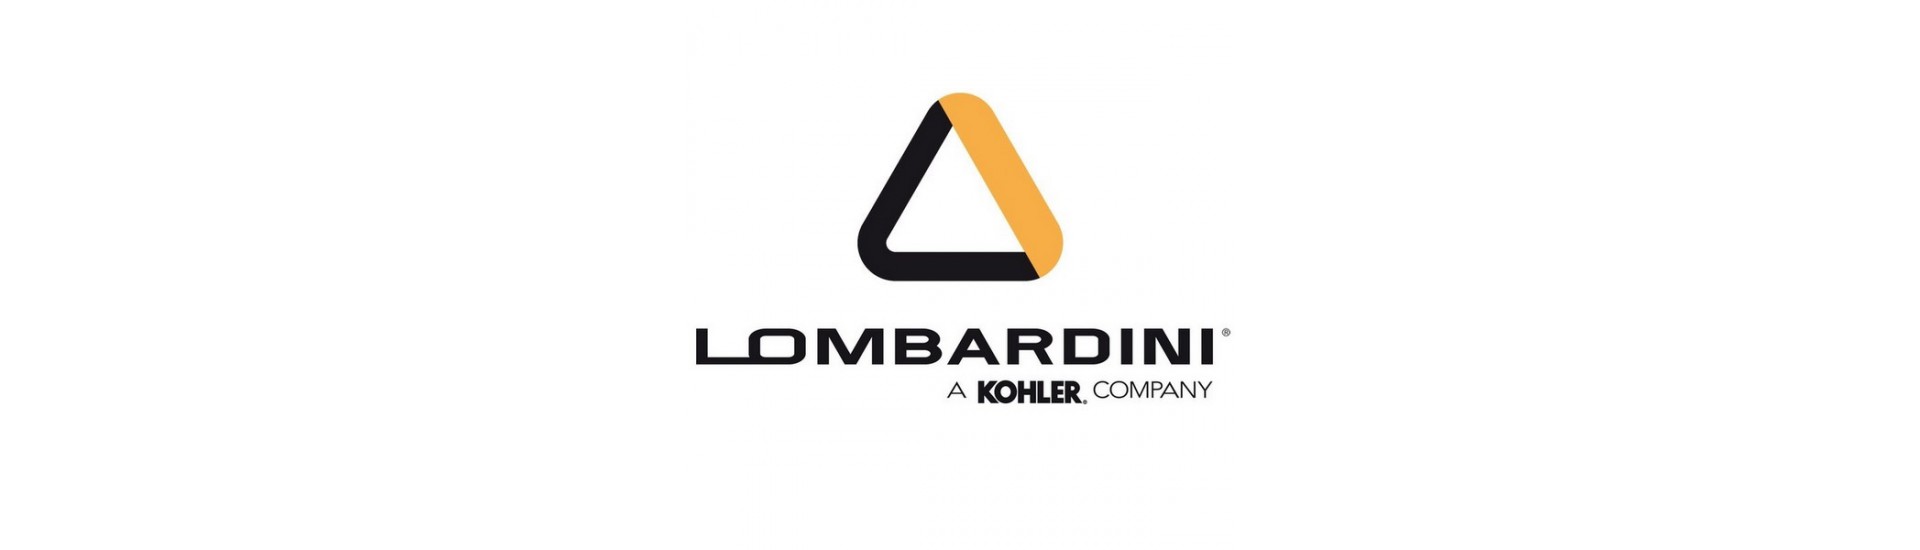 Sensor de temperatura Lombardini au meilleur prix voiture sans permis